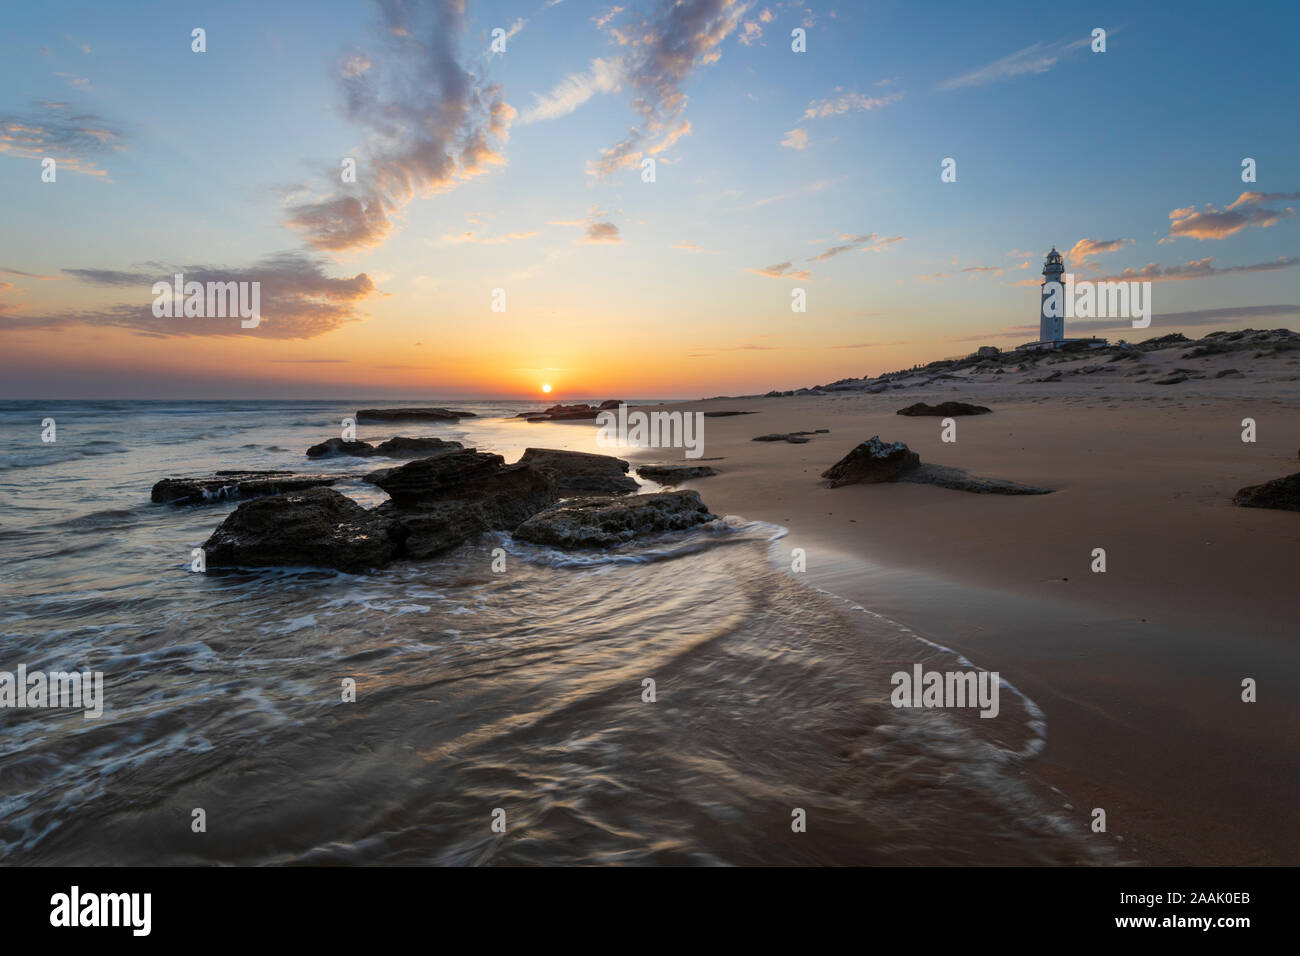 Kap Trafalgar Leuchtturm bei Sonnenuntergang mit Wellen am Strand brechen, Los Caños de Meca, Costa de la Luz, Provinz Cadiz, Andalusien, Spanien, Europa Stockfoto